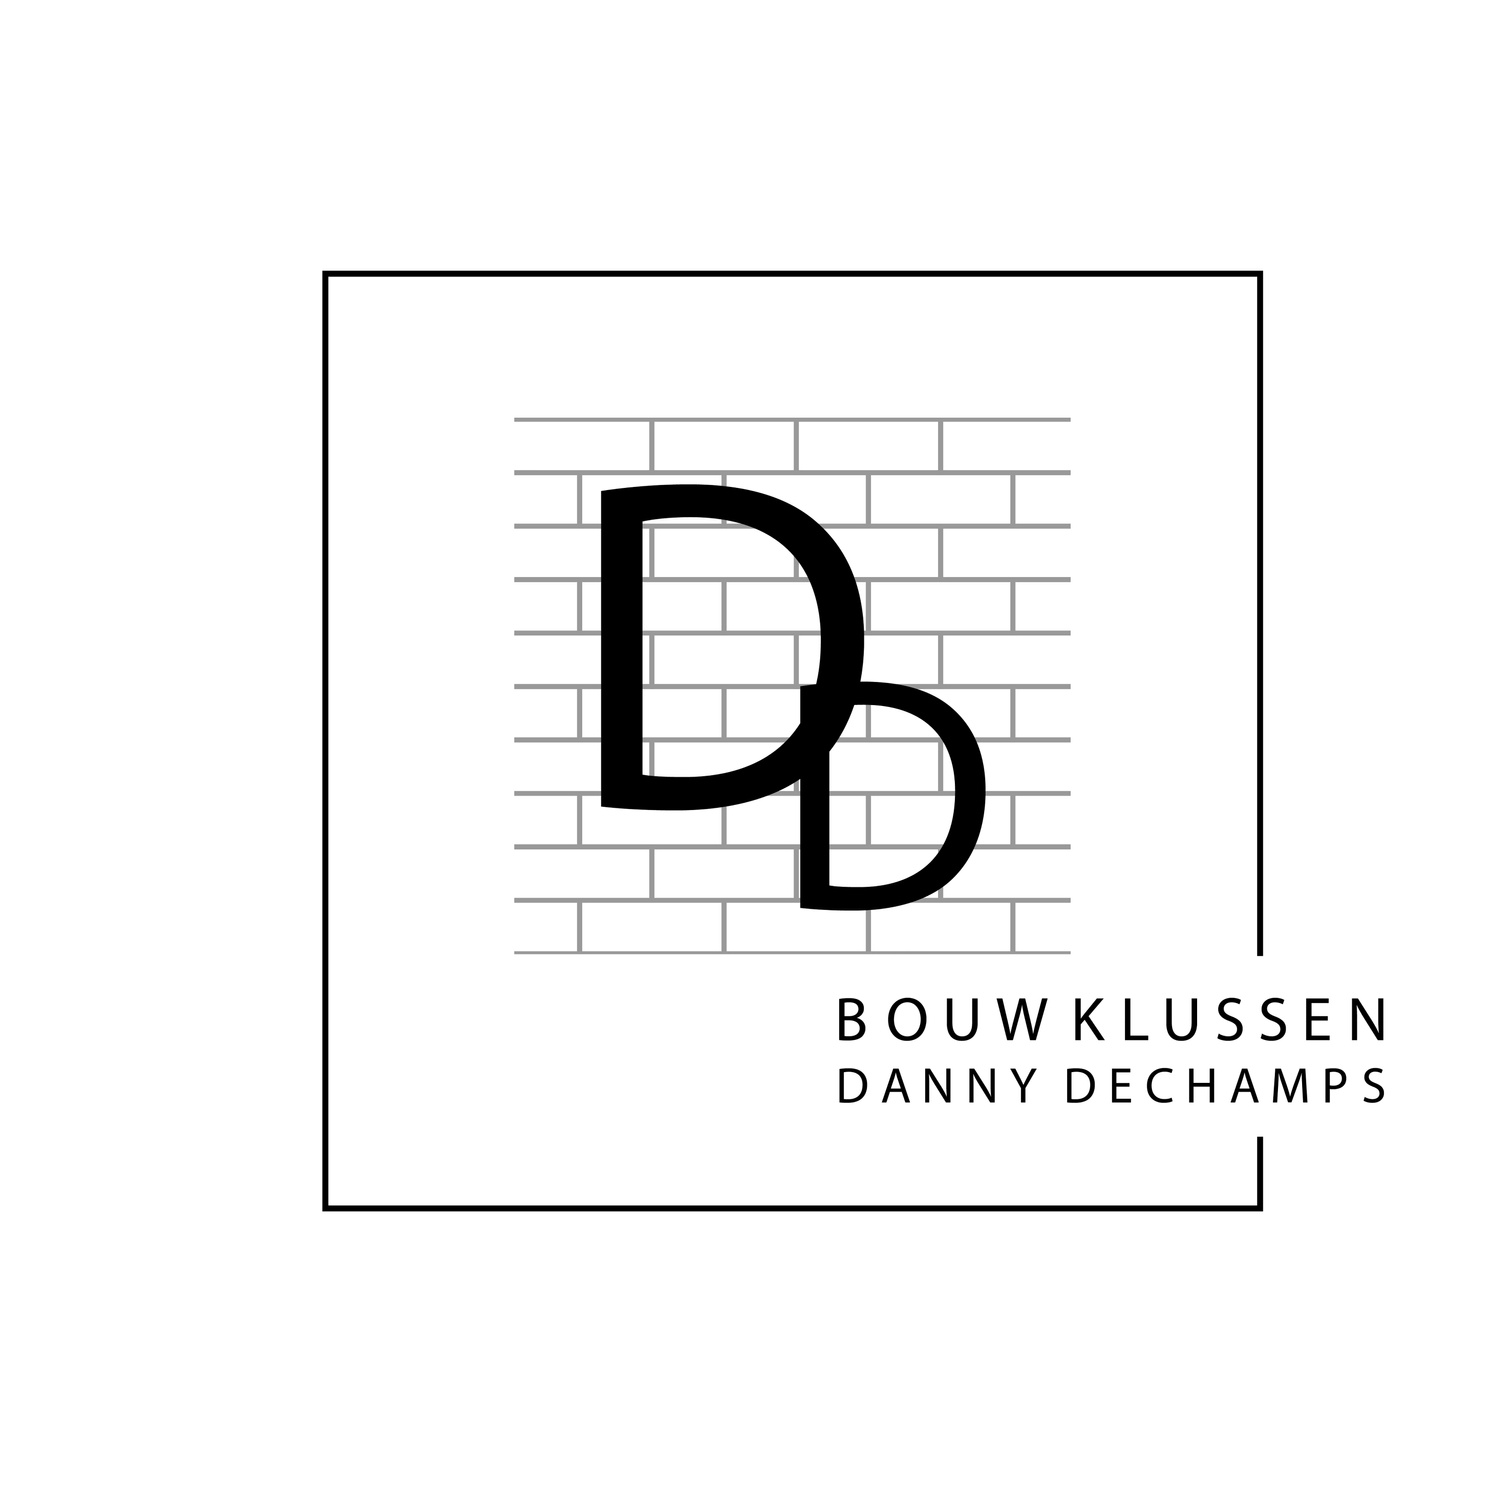 Bouwklussen Danny Dechamps logo